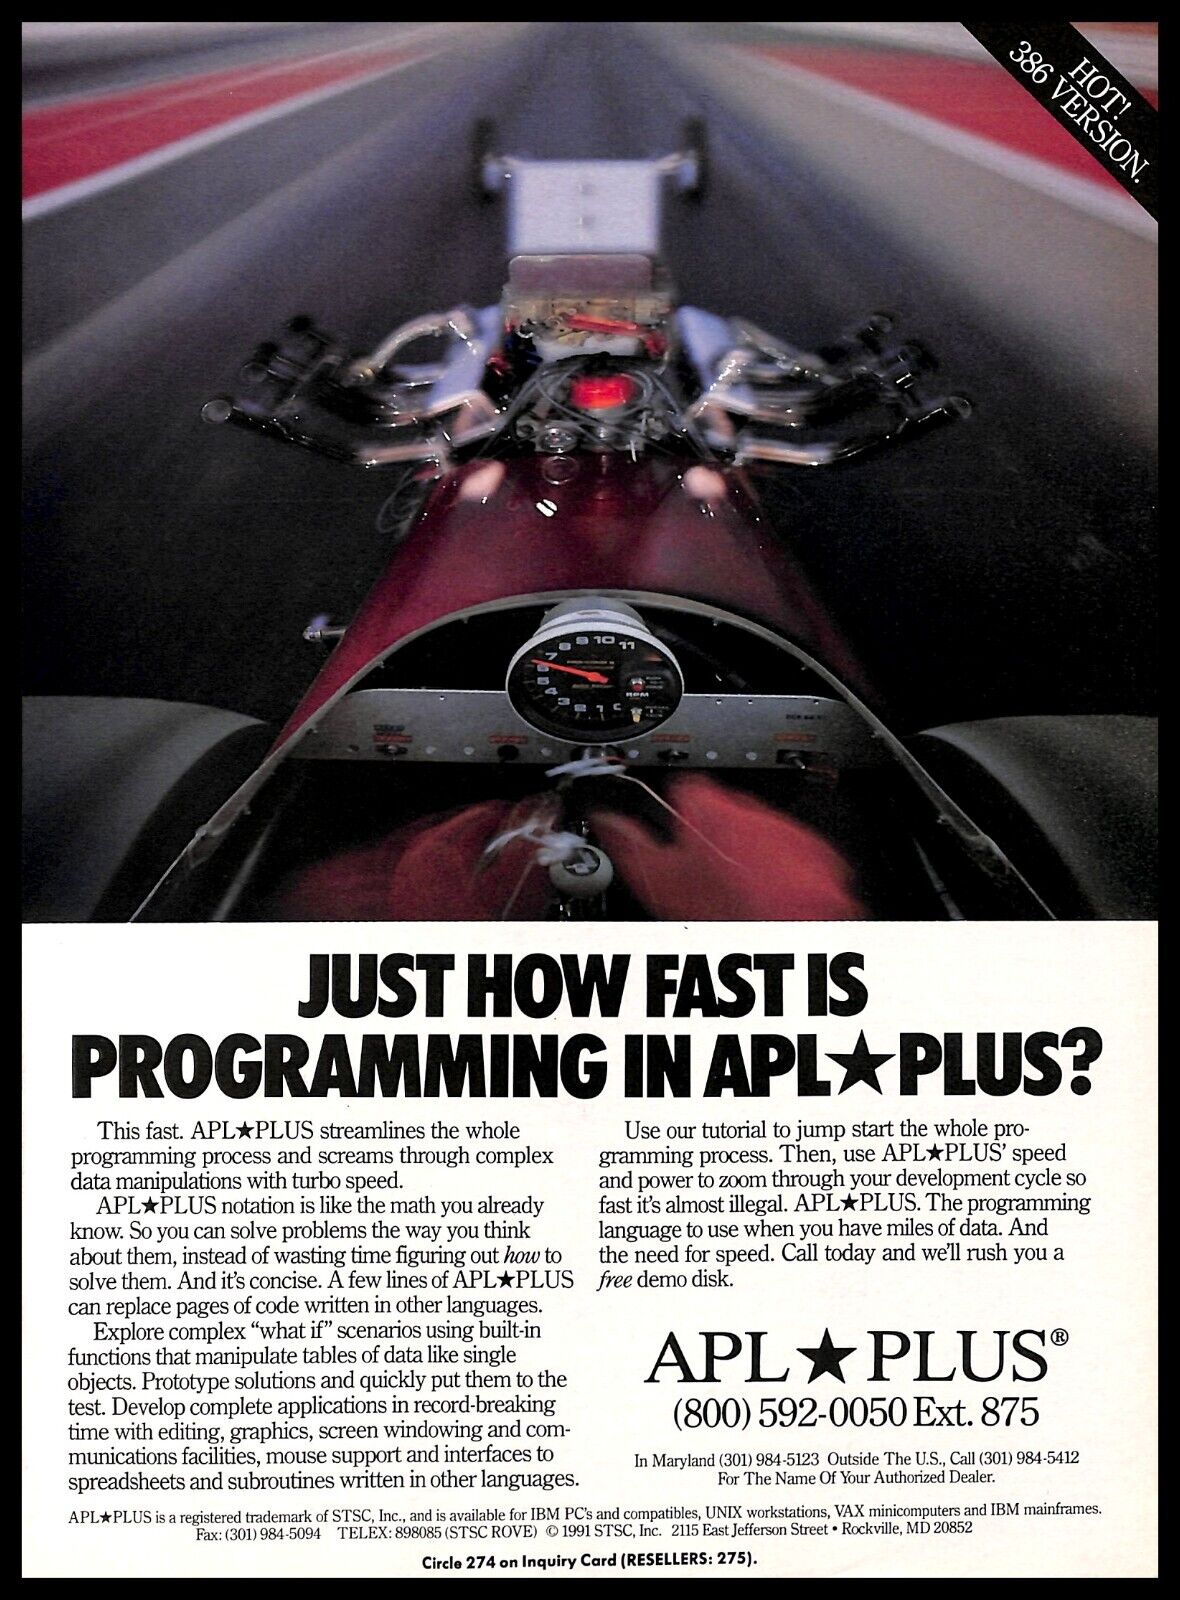 1991 APL PLUS Vintage PRINT AD Retro Programming Language Code Racing Tech